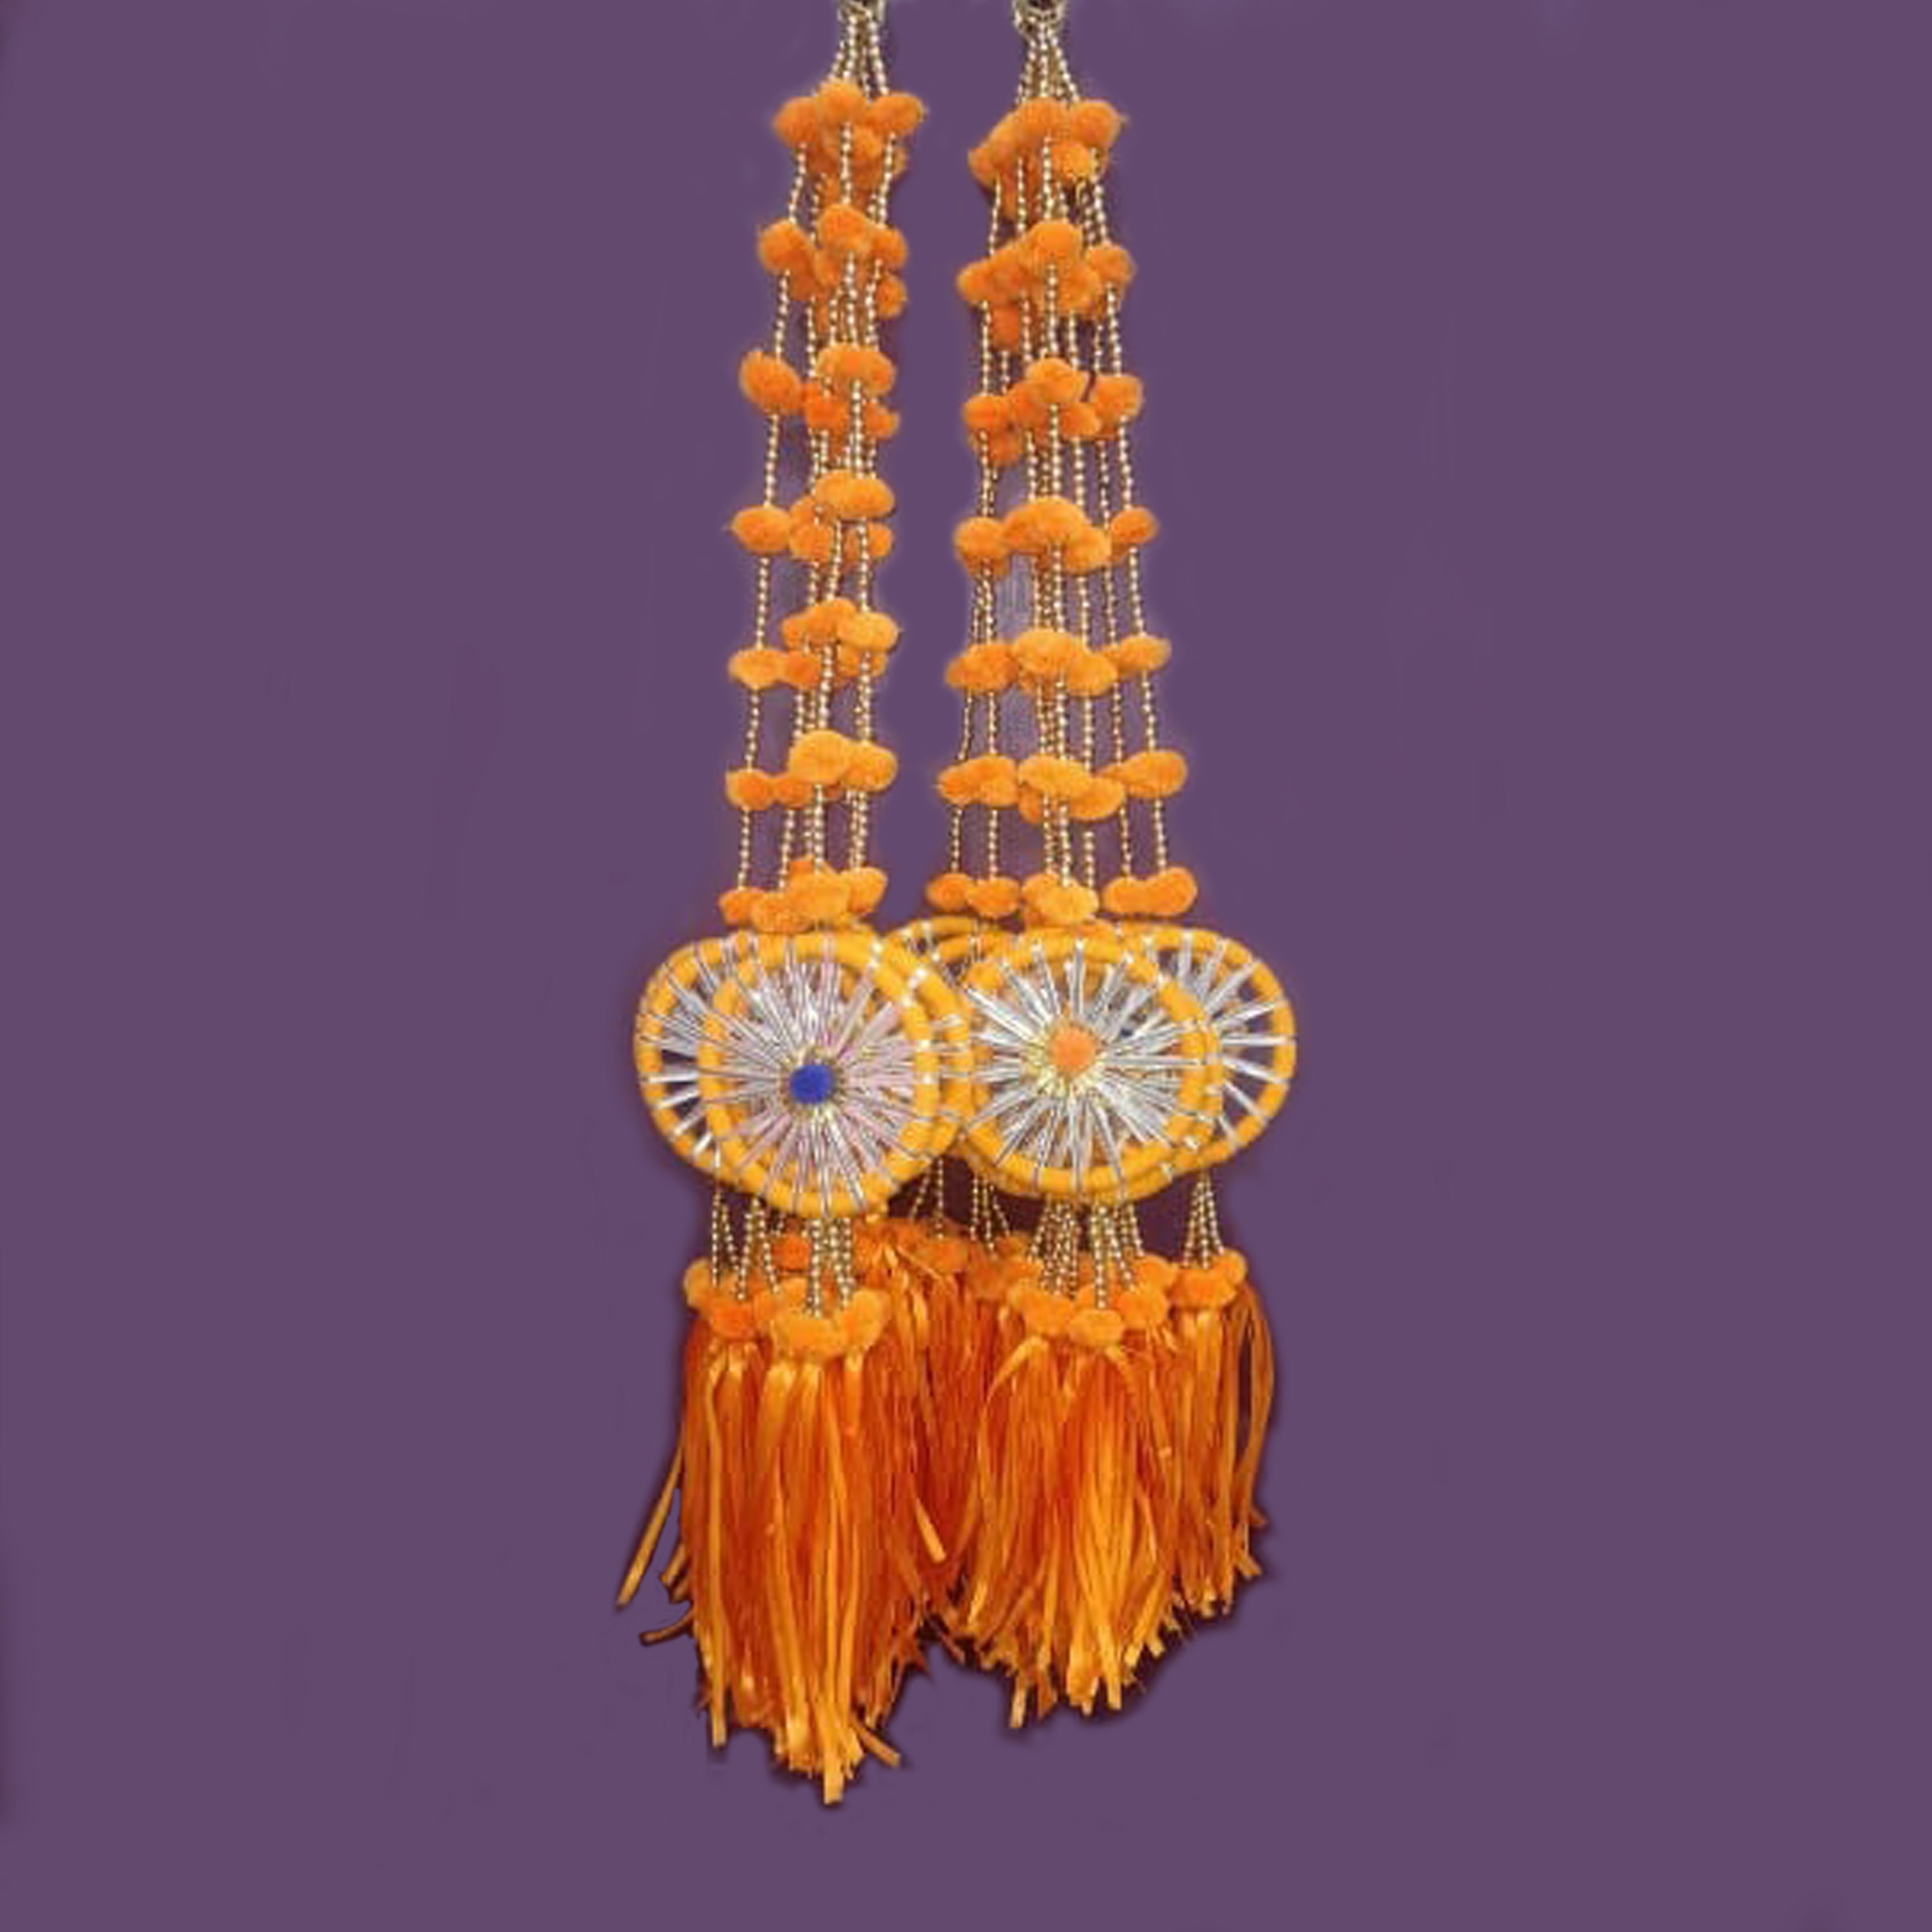 Traditional wall single ring hanging Ladi